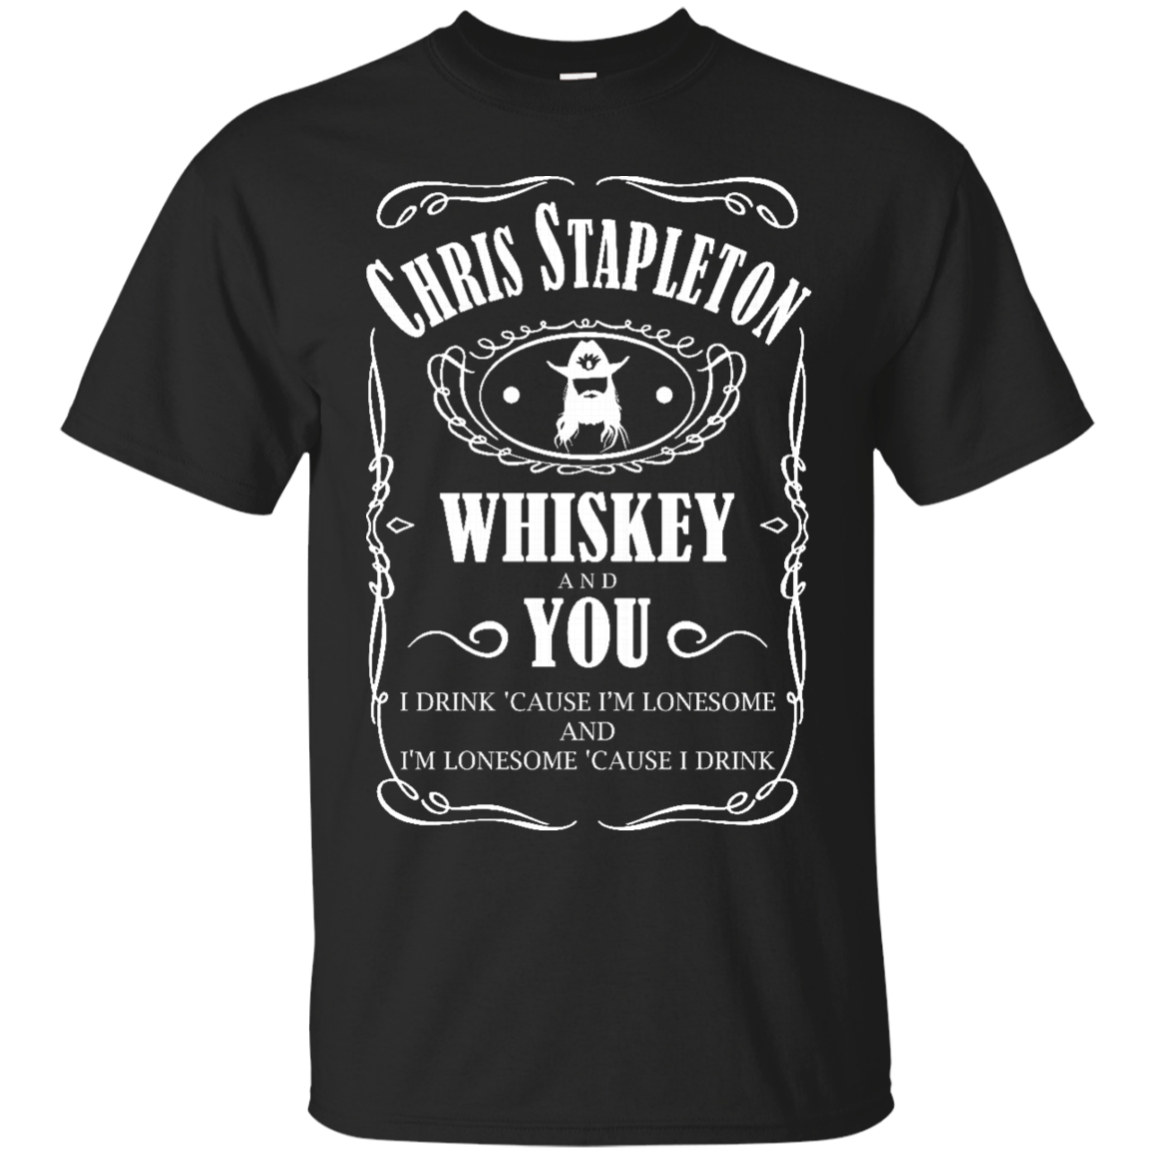 Chris Stapleton Shirts Whiskey And You I Drink - Teesmiley